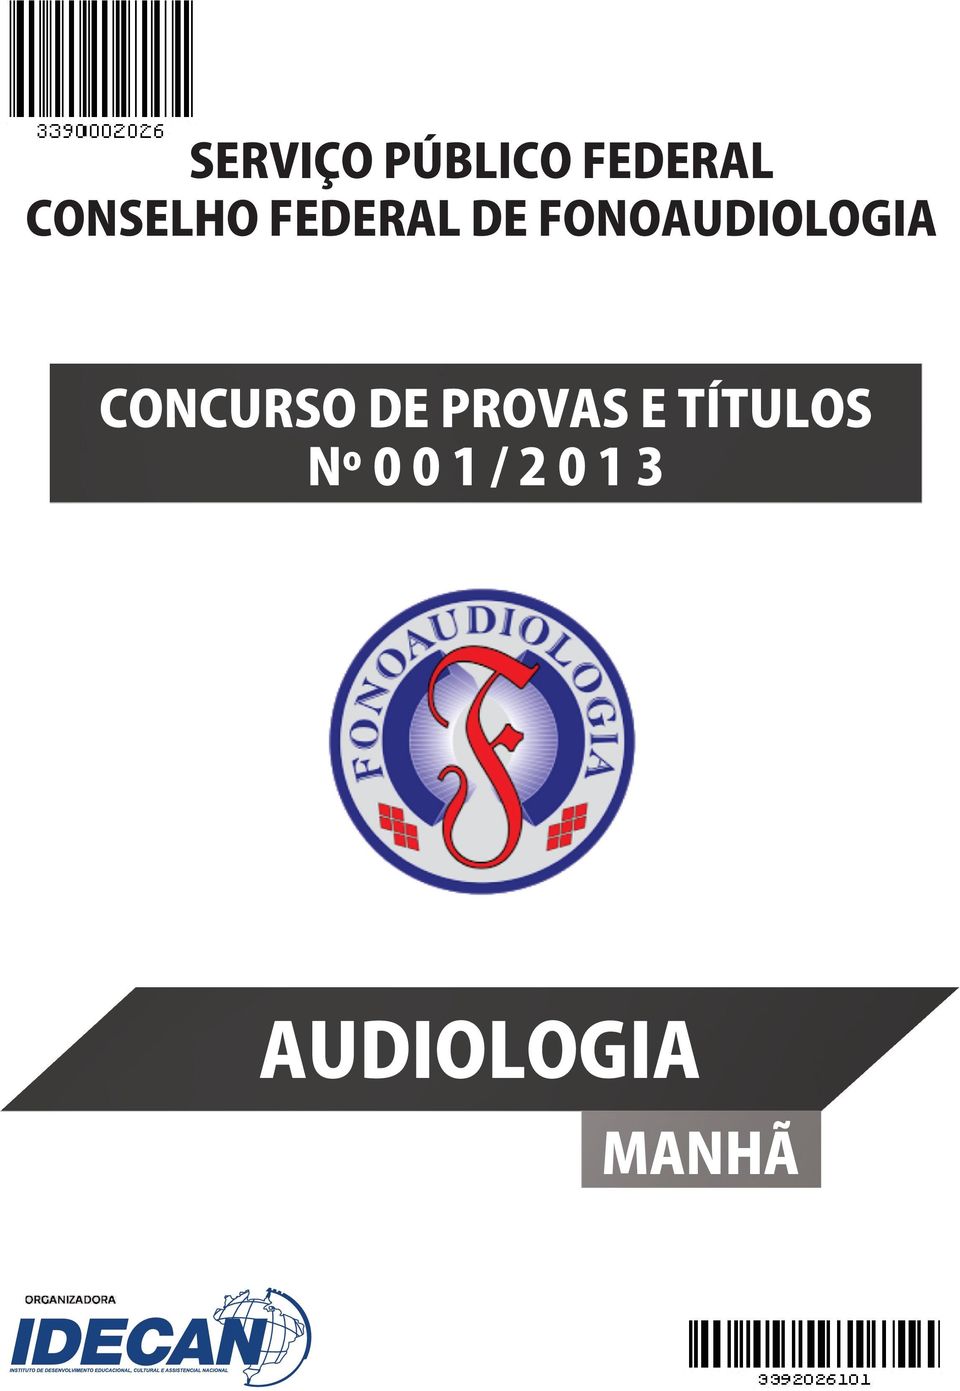 FONOAUDIOLOGIA CONCURSO DE